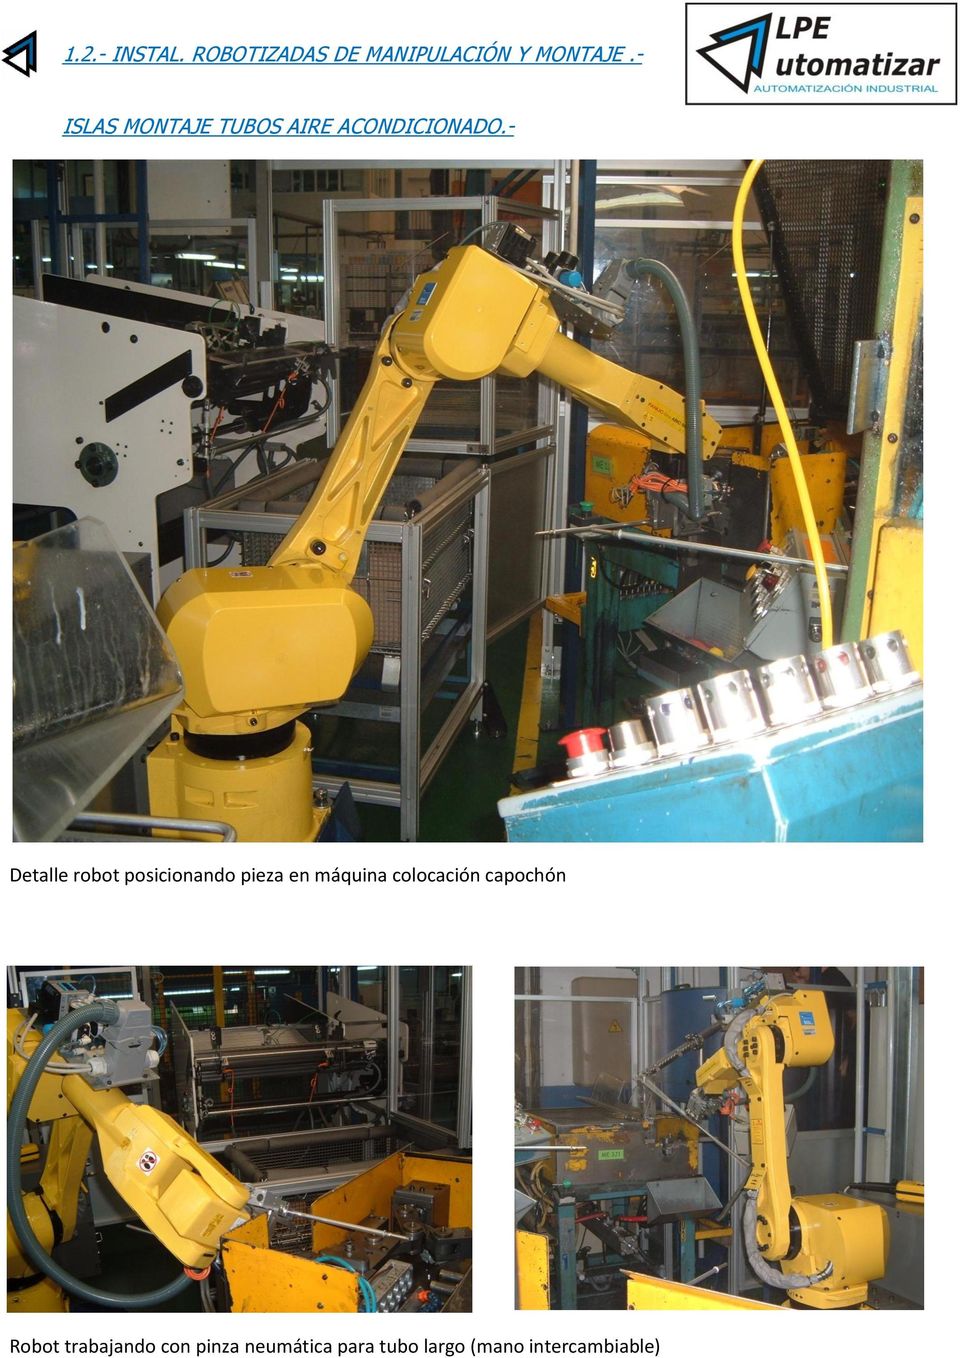 - Detalle robot posicionando pieza en máquina colocación